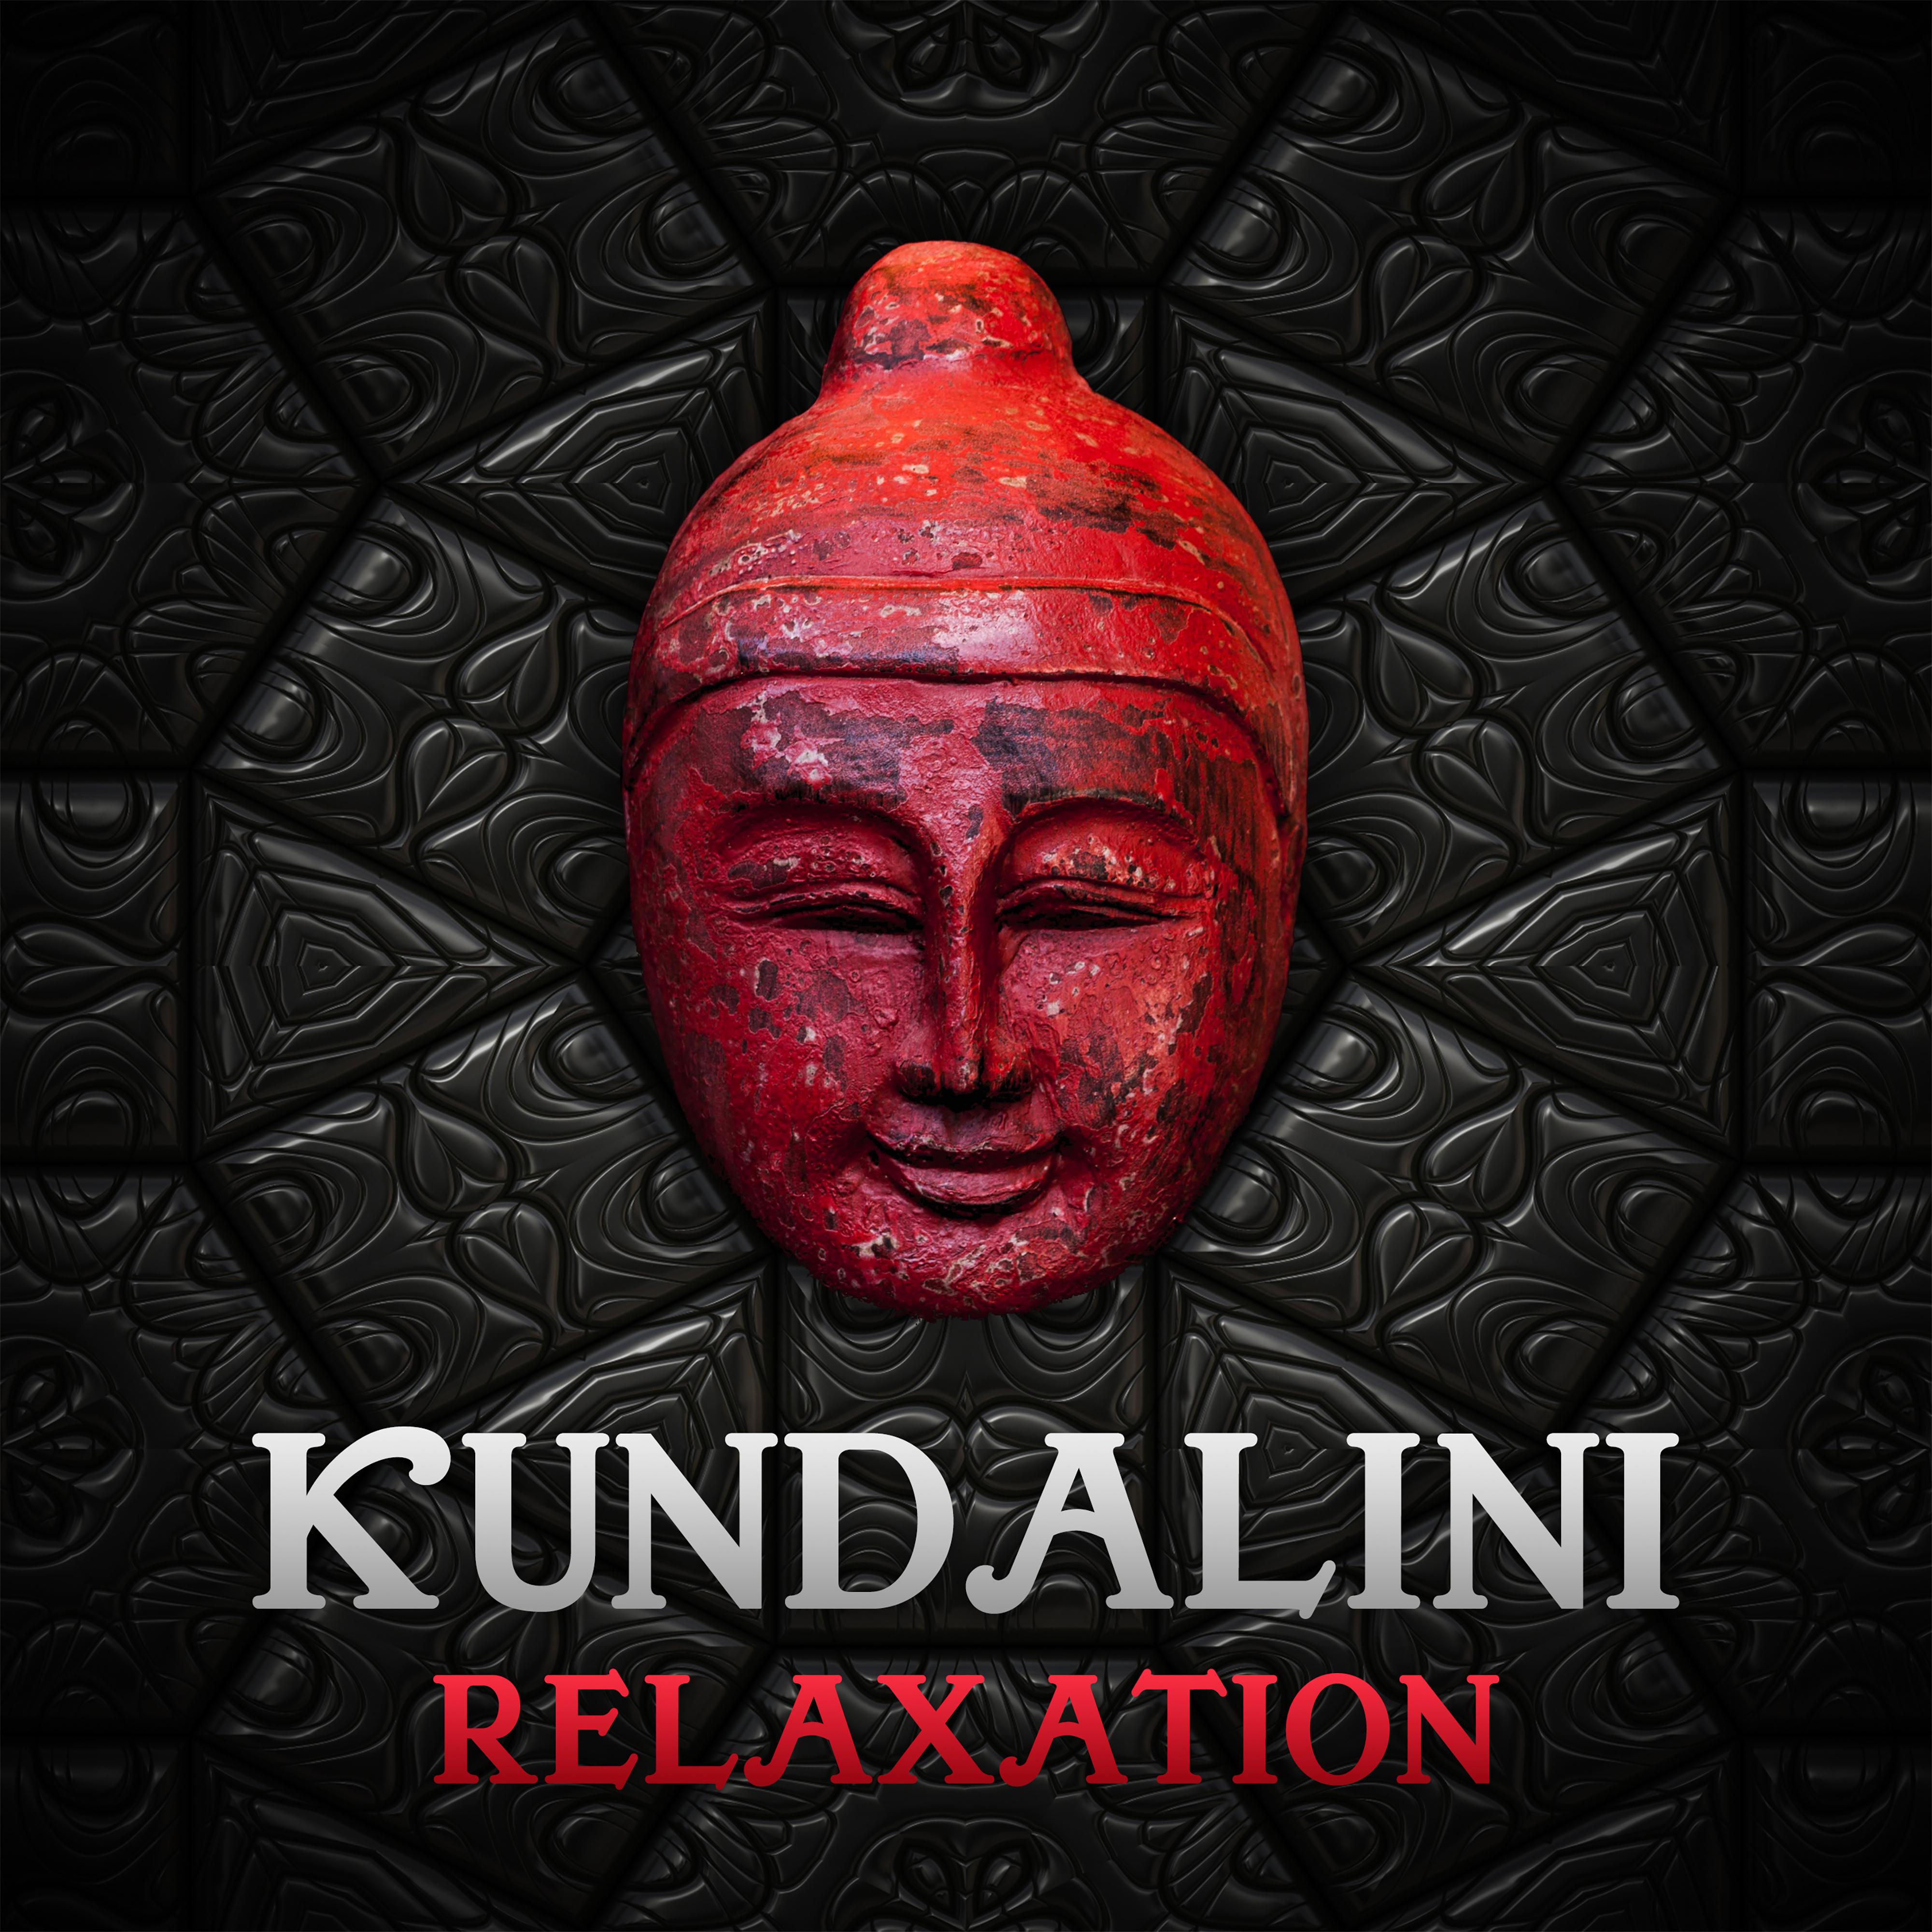 Kundalini Relaxation – Meditation Music, Yoga Training, Deep Focus, Tibetan Music, Zen, Music for Relaxation